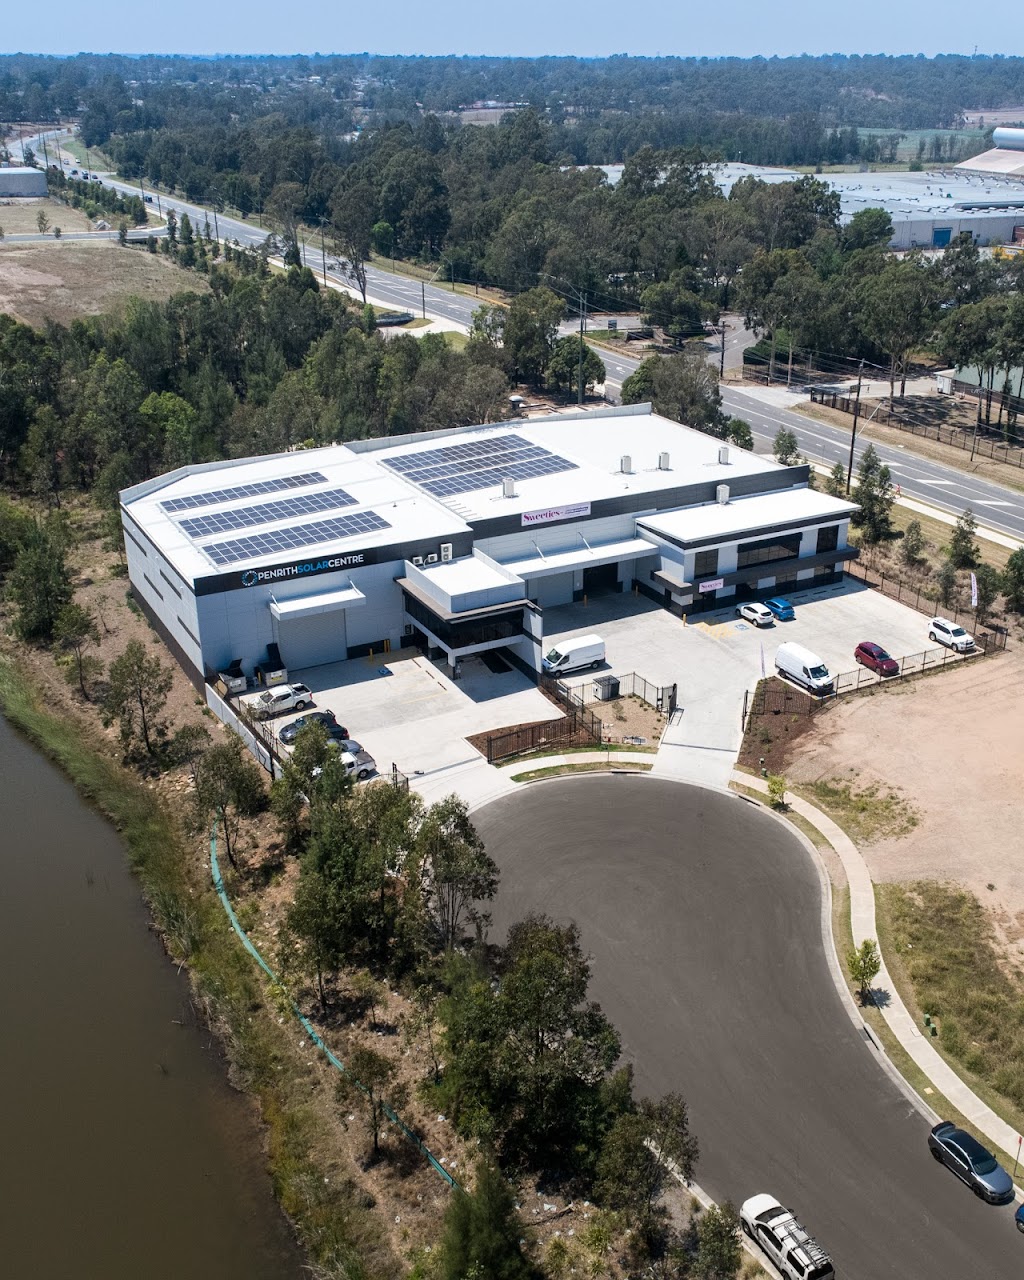 Penrith Solar Centre | 130a Batt St, Jamisontown NSW 2750, Australia | Phone: 1800 202 930